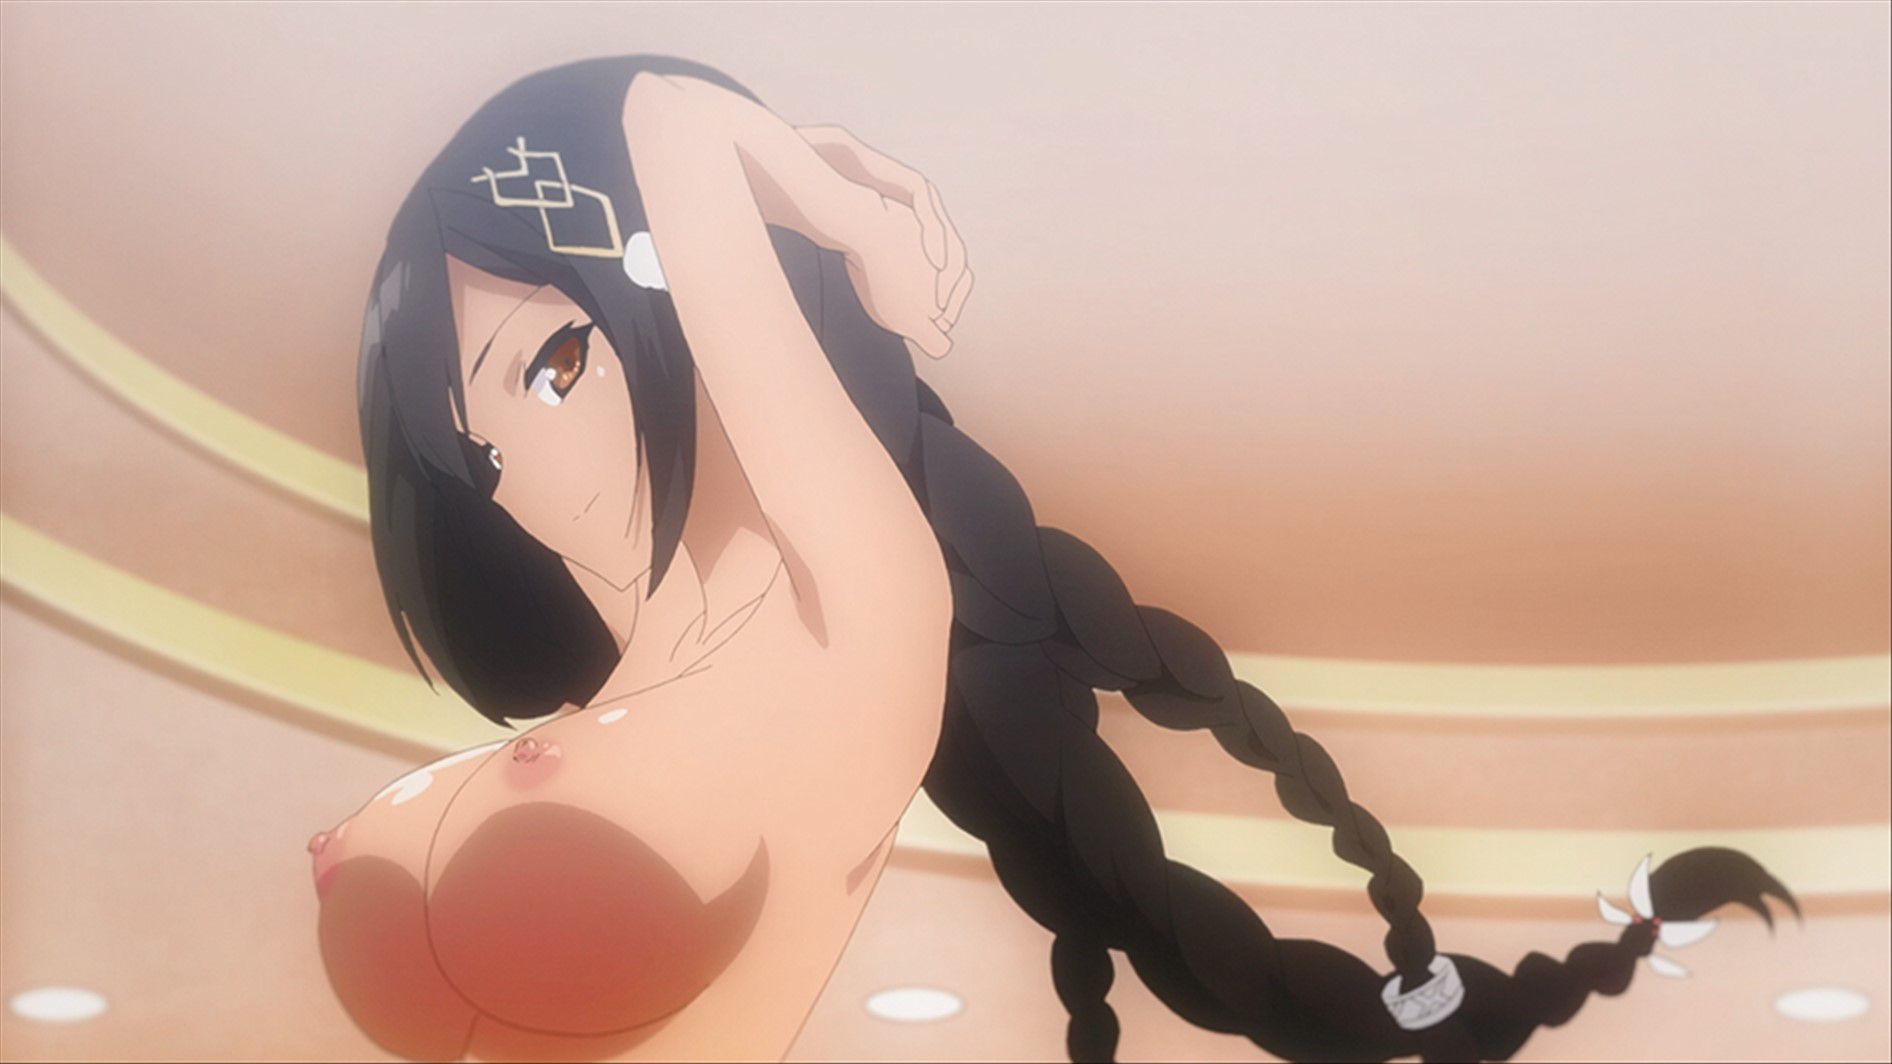 Anime nipple scene